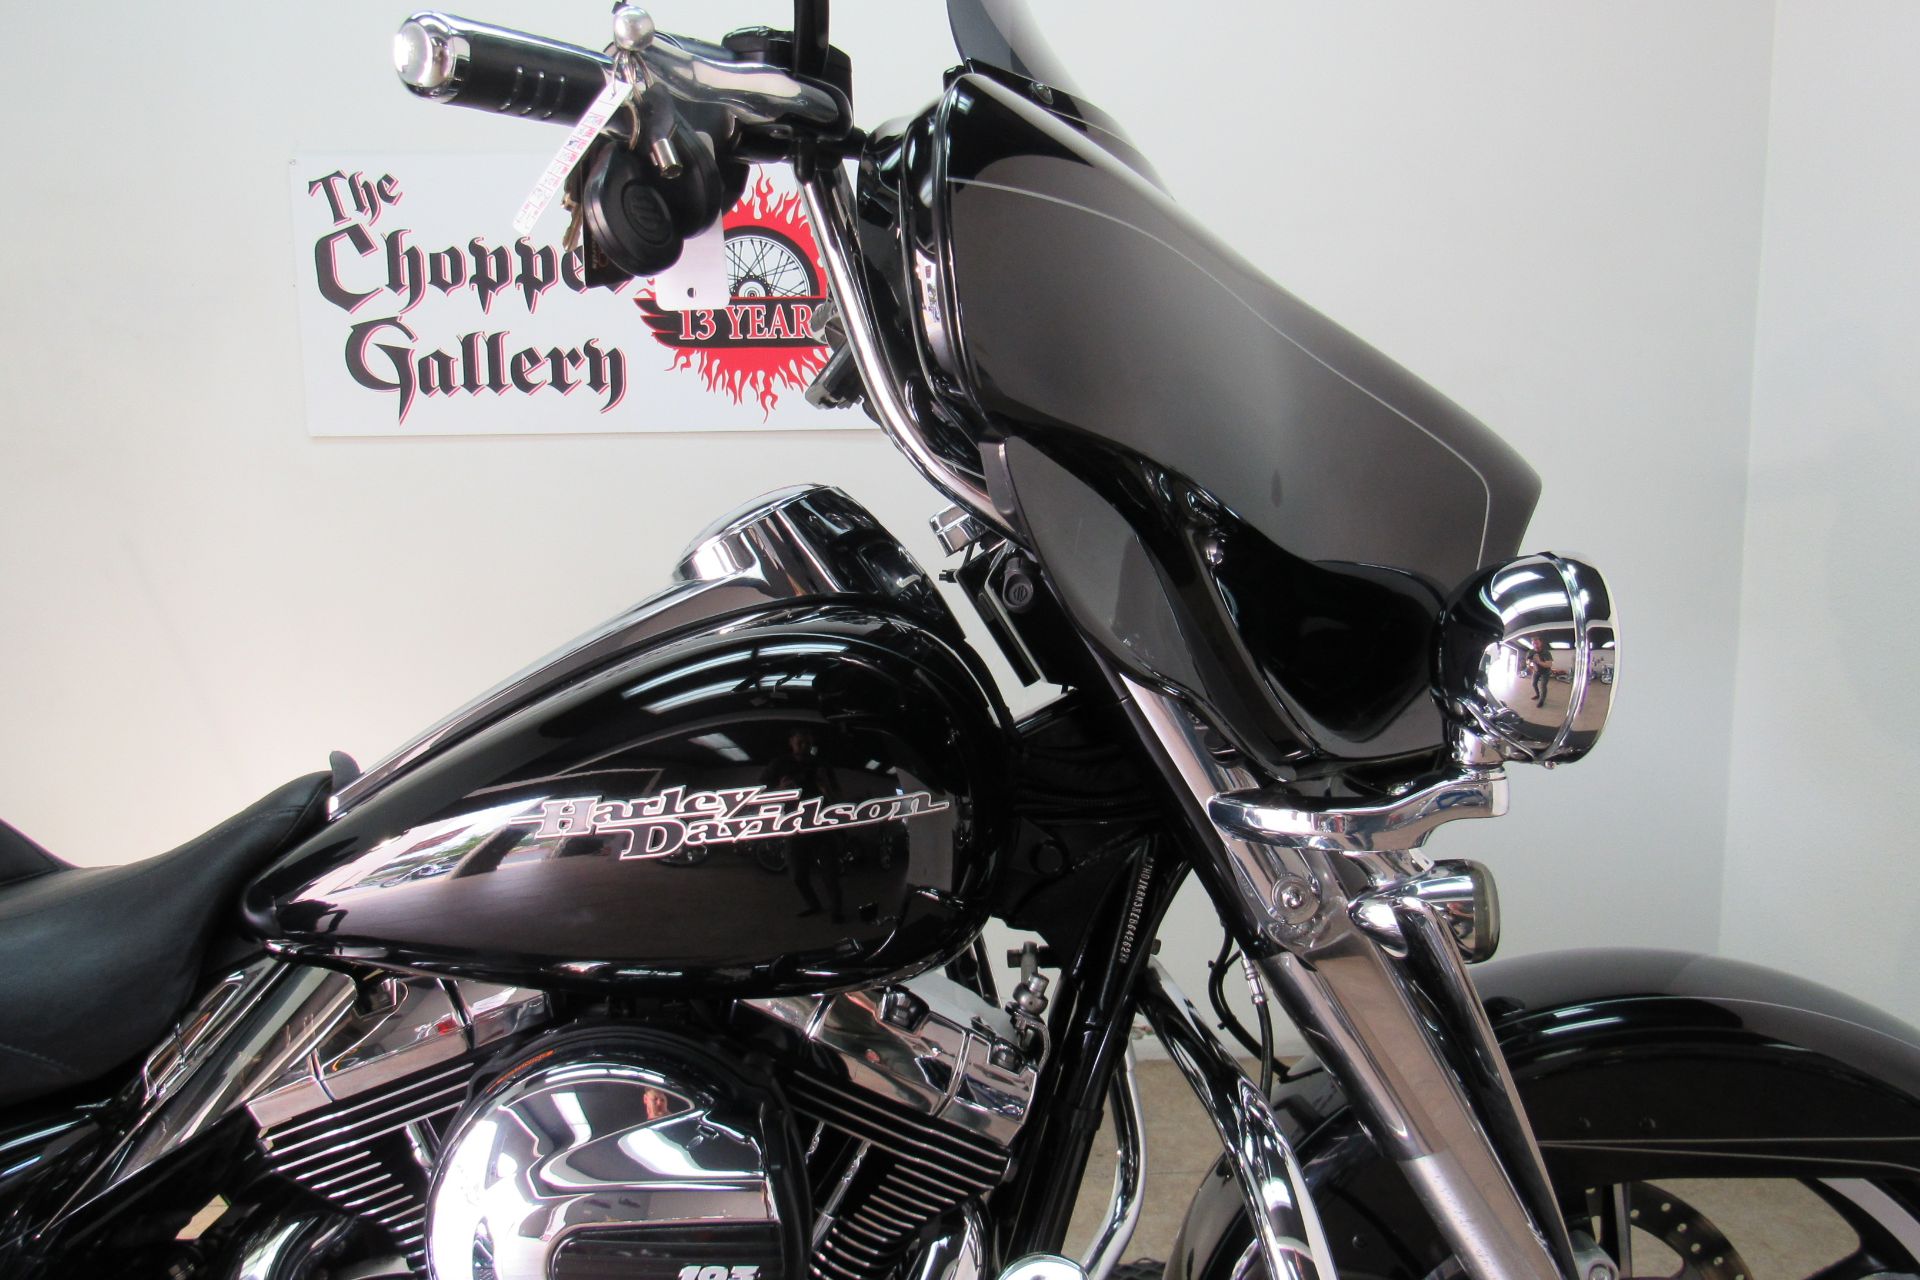 2014 Harley-Davidson Street Glide® Special in Temecula, California - Photo 9